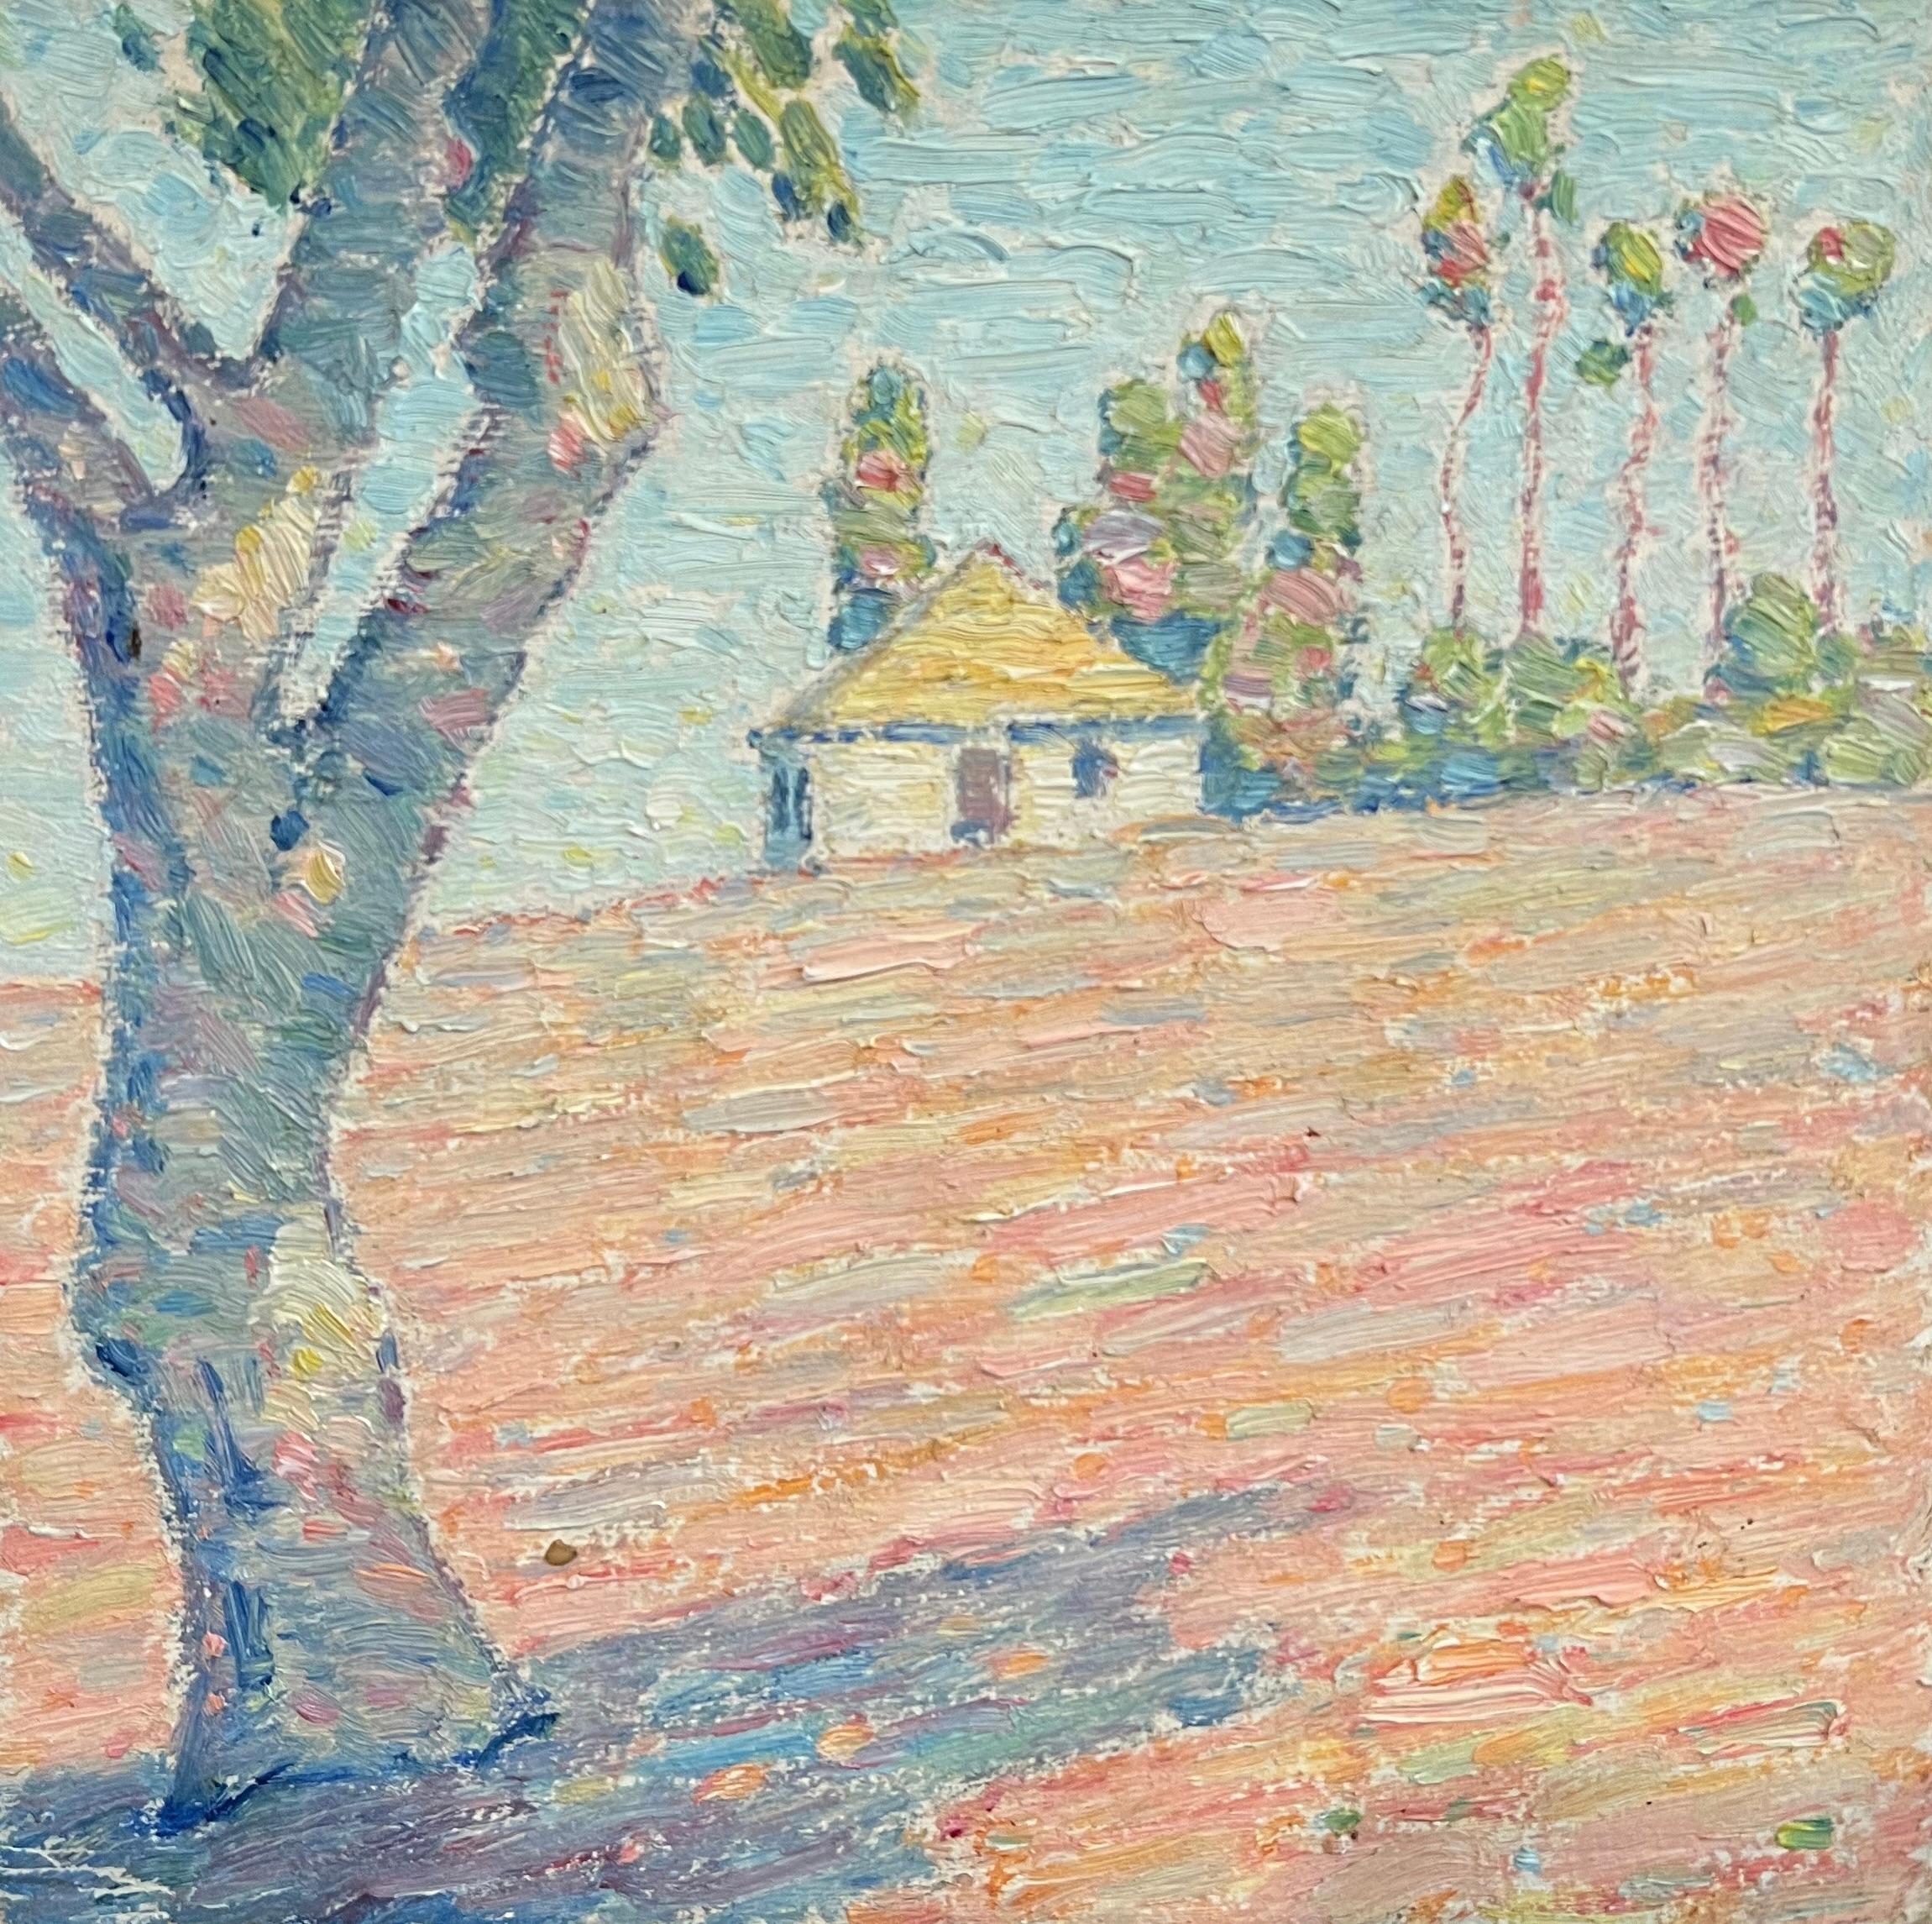 Santa Barbara CA - Plein Air Landscape Hilltop House w Palm Trees Colorful #0-71 - Painting by Francis Draper Jr.